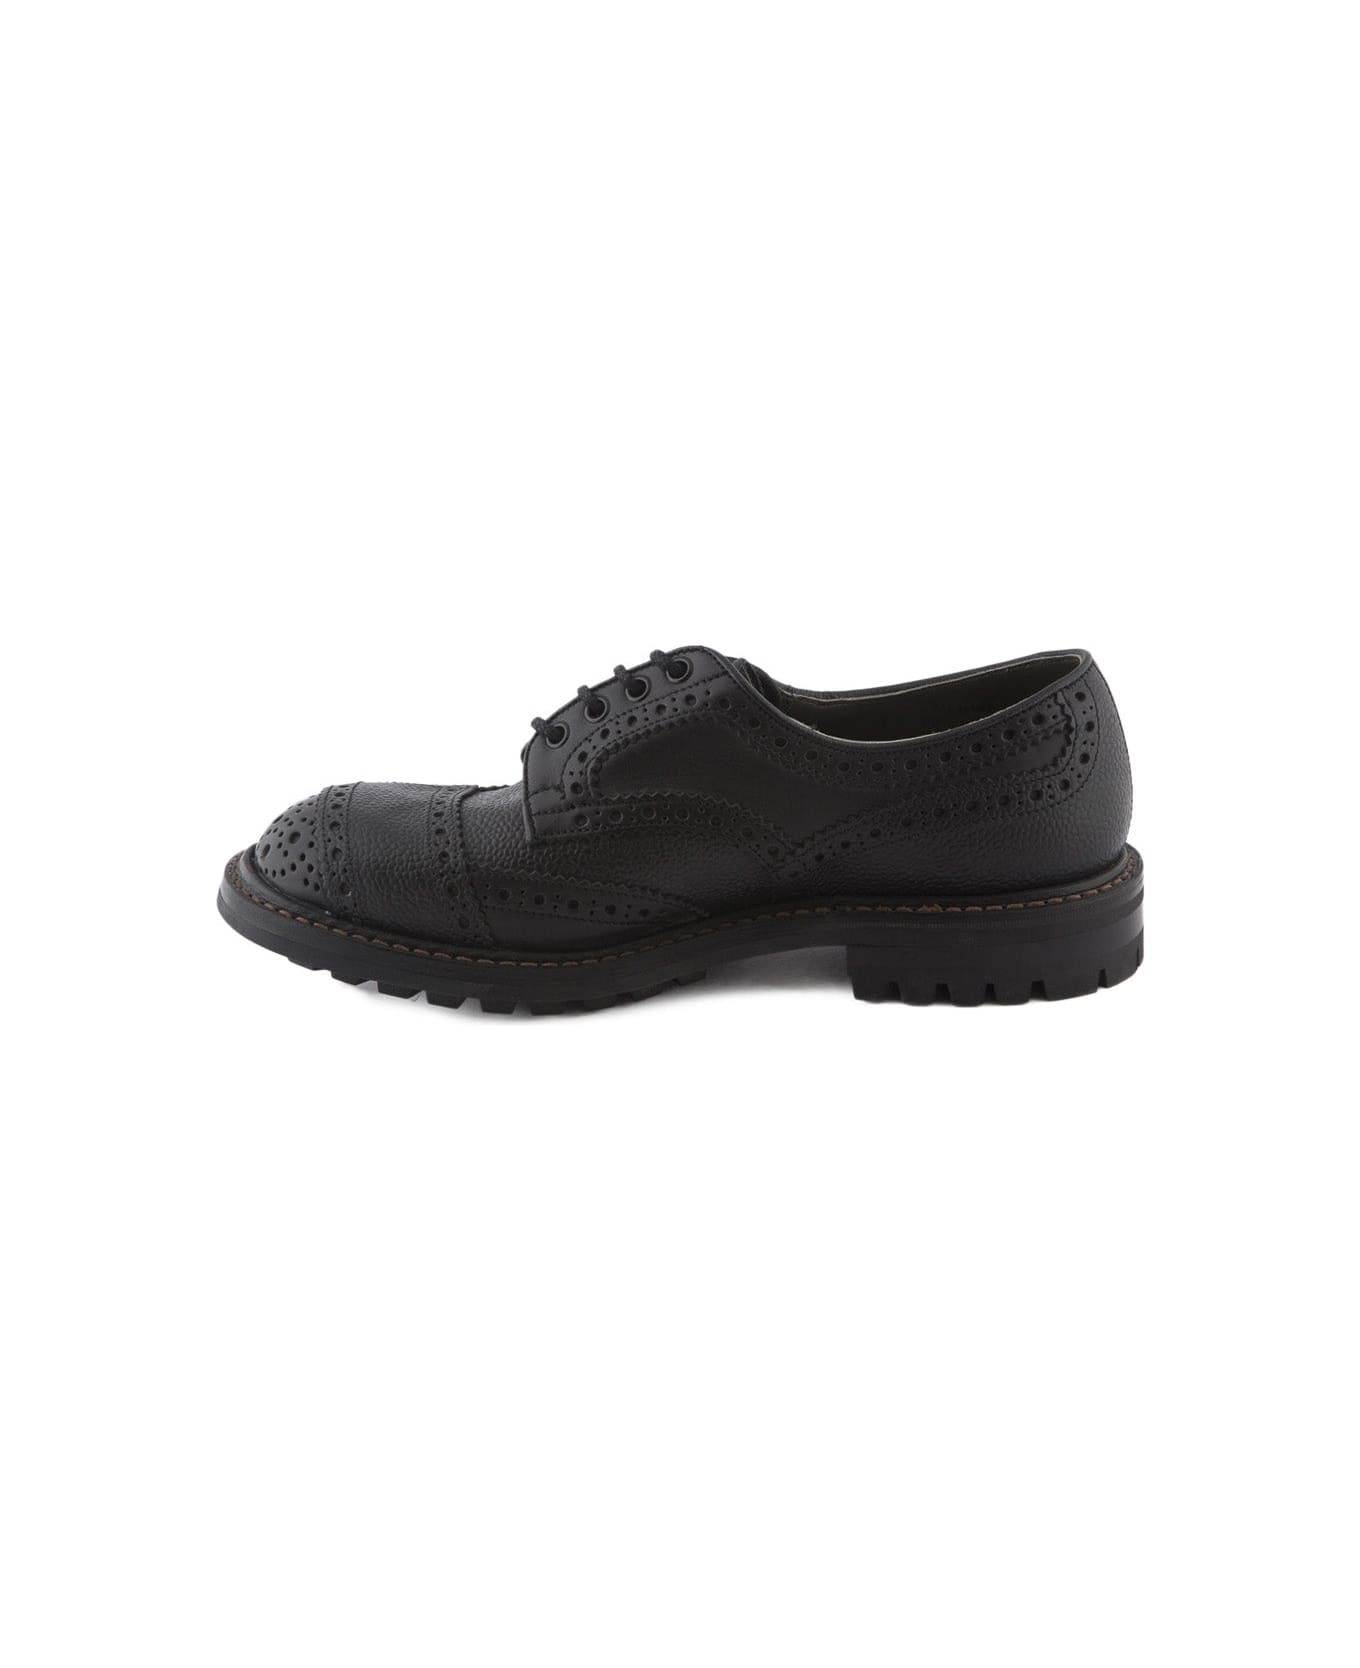 Tricker's Francis 7615 Black Calf Derby Shoe - Nero